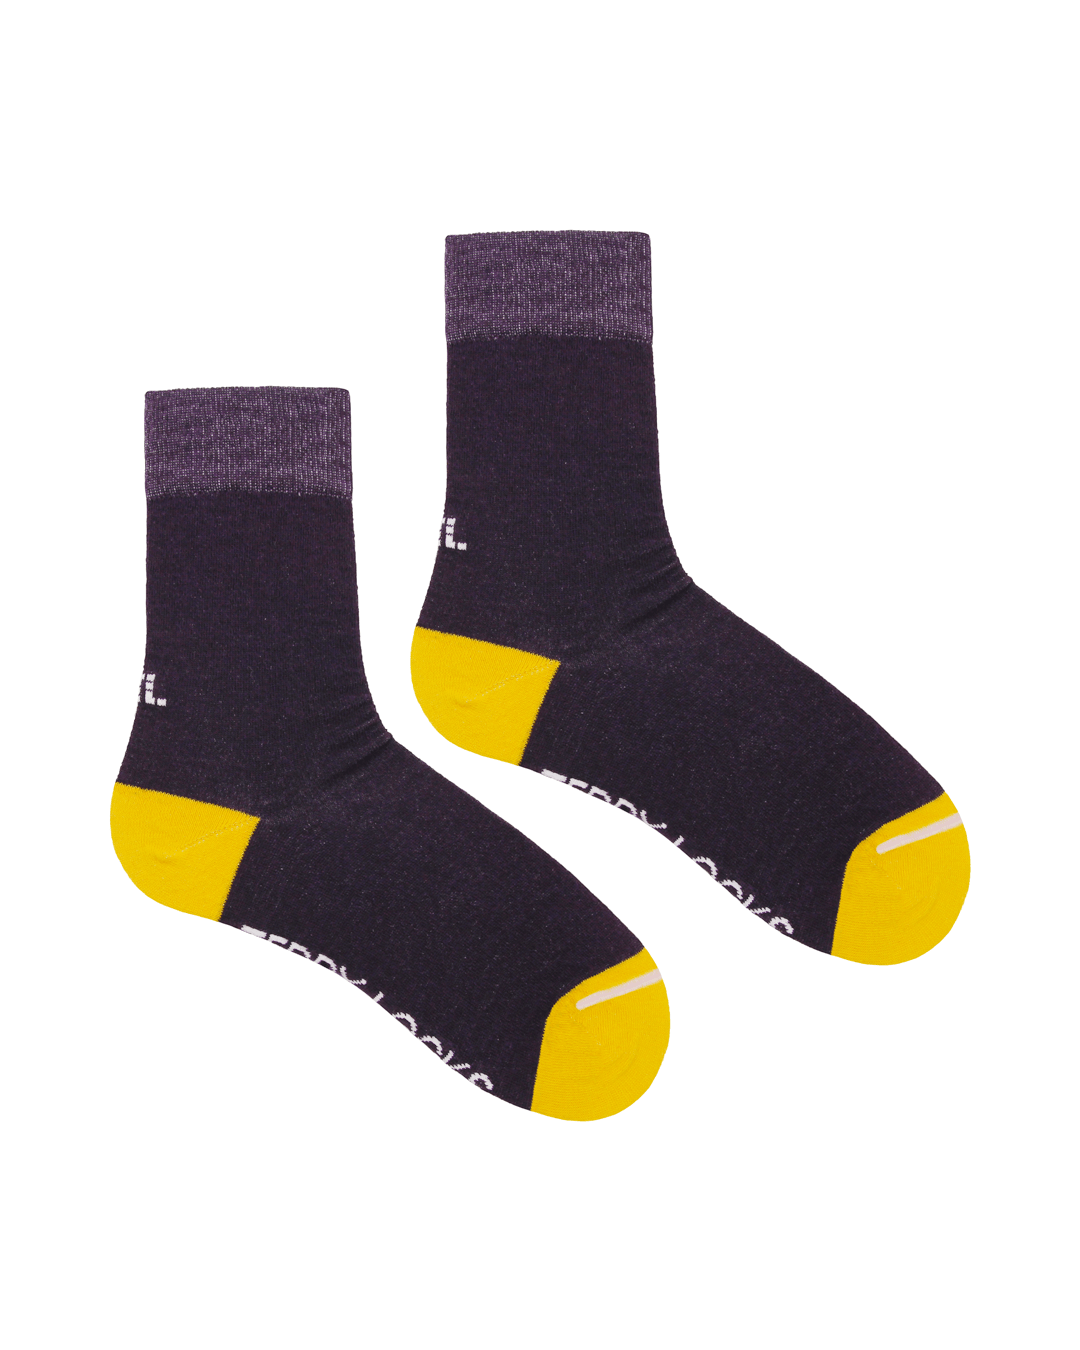 Dark Purple Everyday Crew Socks - Teddy Locks cockney rhyming slang for socks